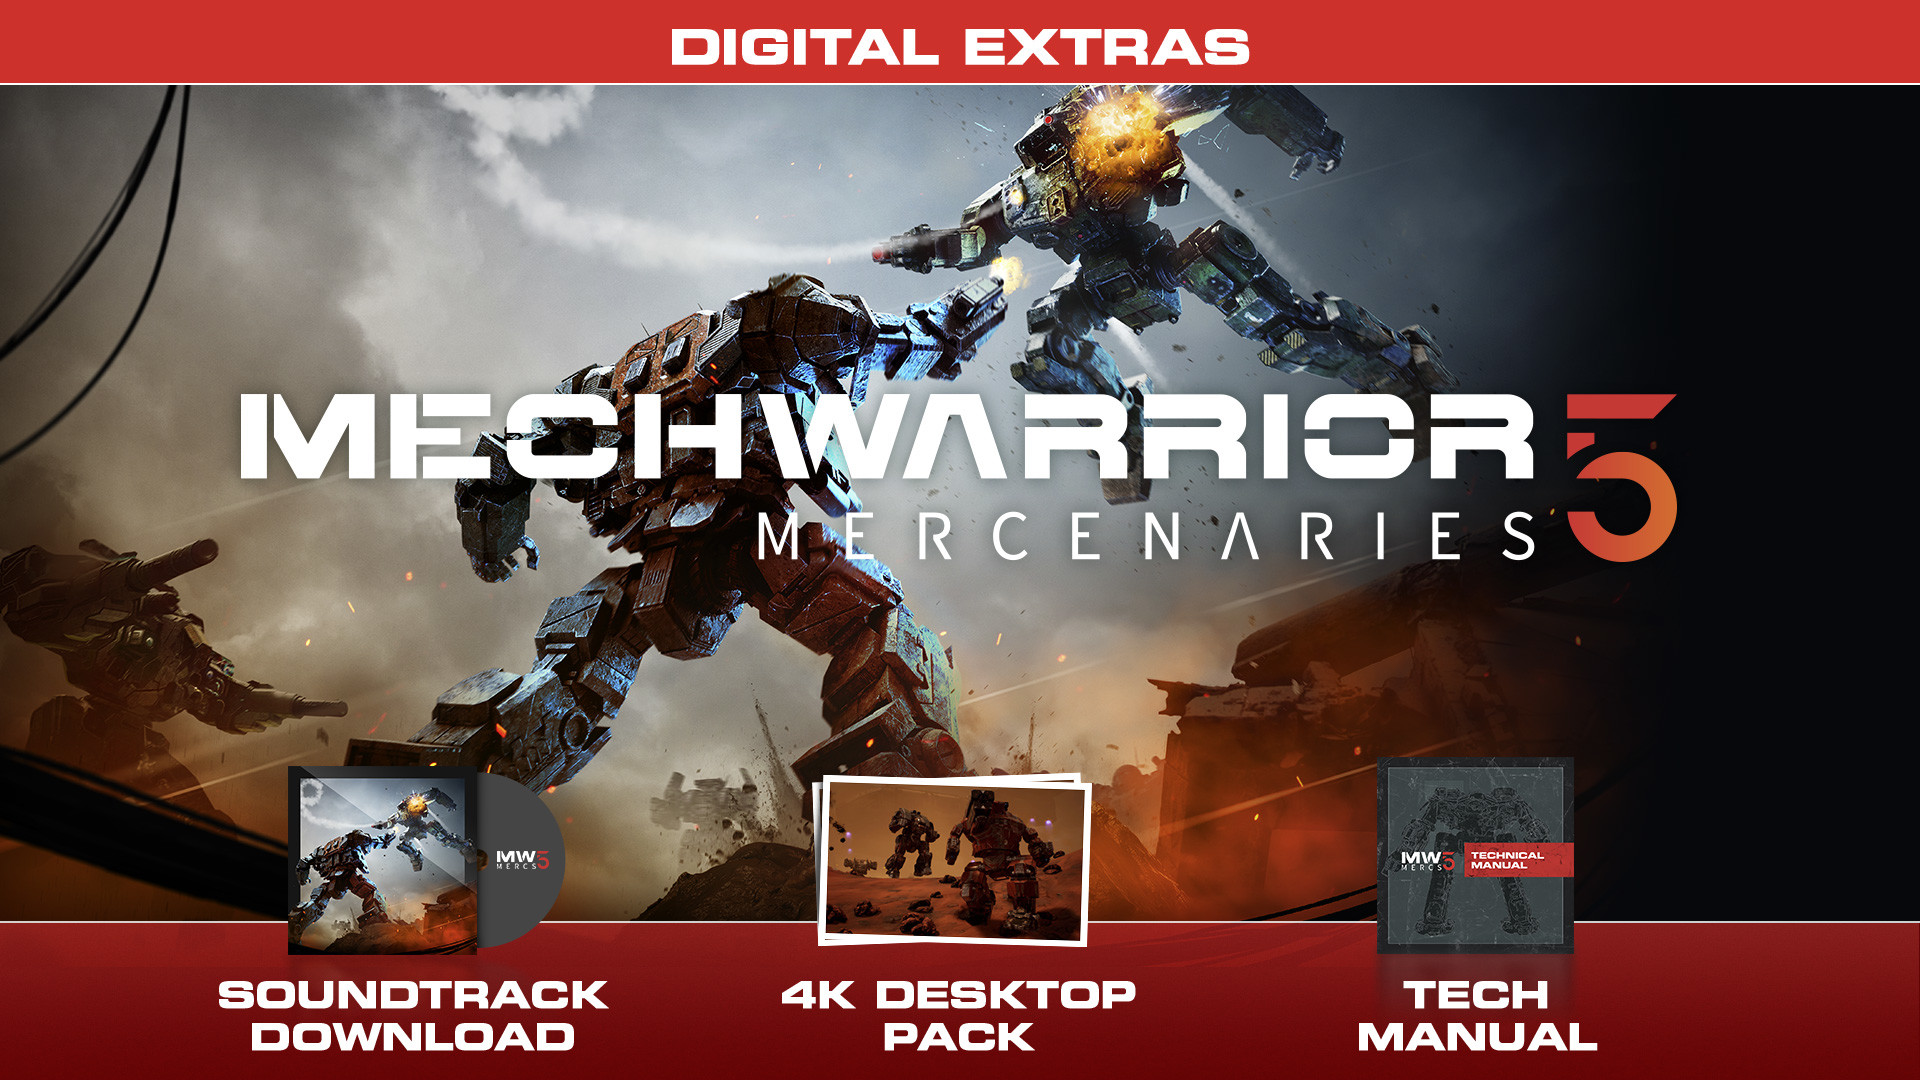 MechWarrior 5: Mercenaries - Digital Extras Content On Steam